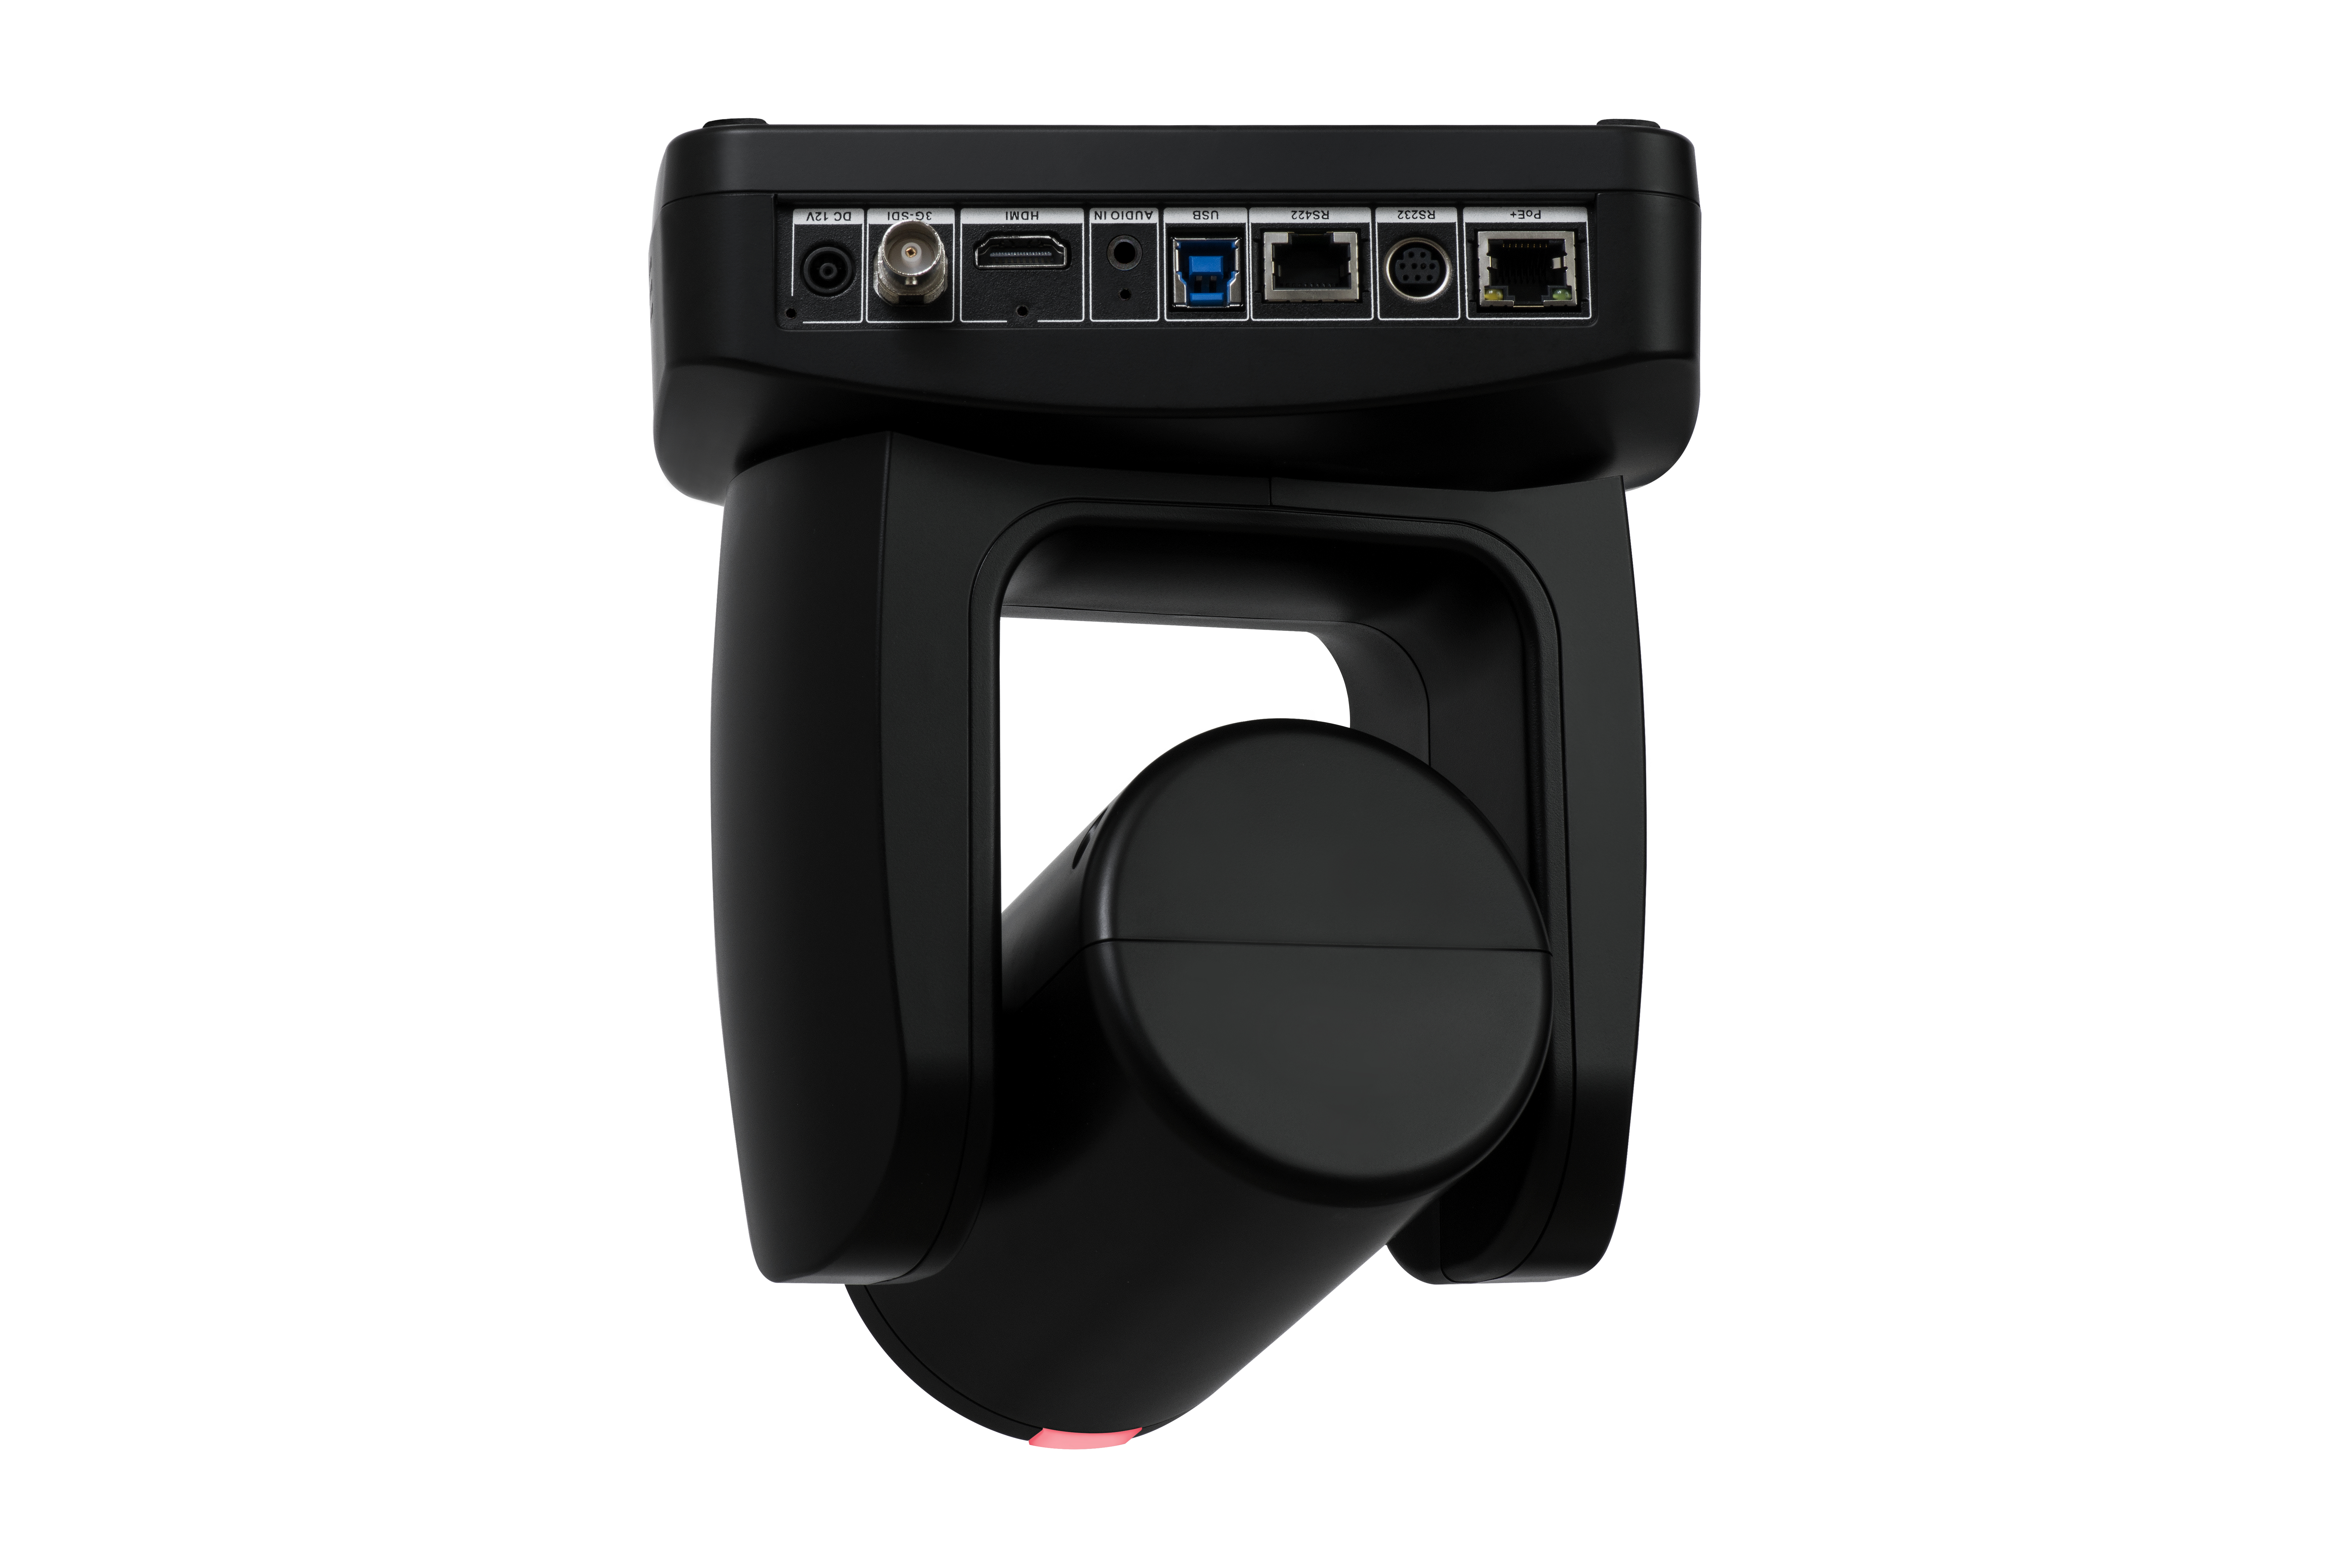 AVer PTZ Professionelle PTZ-Kamera PTC310UV2 4K, 12X Zoom, HDMI, 3GSDI, USB, RJ45, Auto Tracking